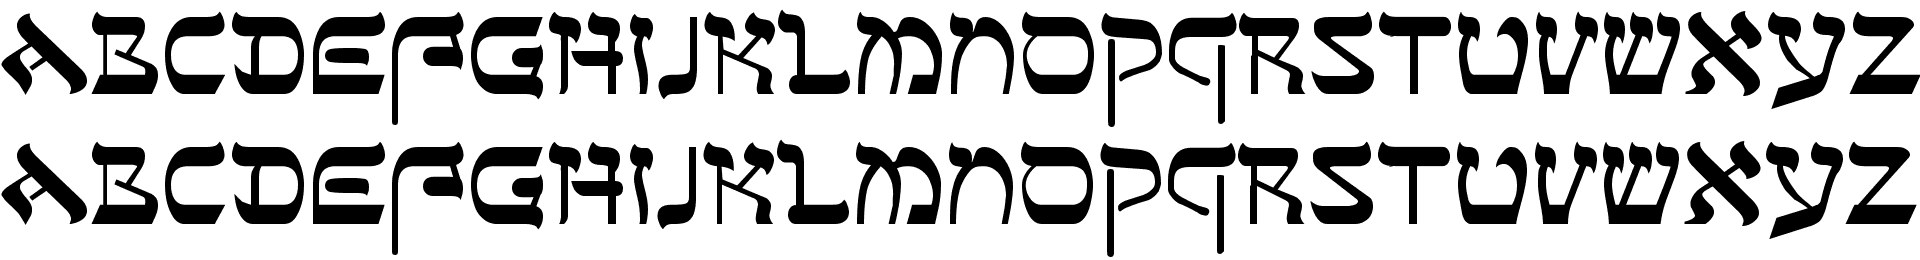 modern hebrew fonts free download